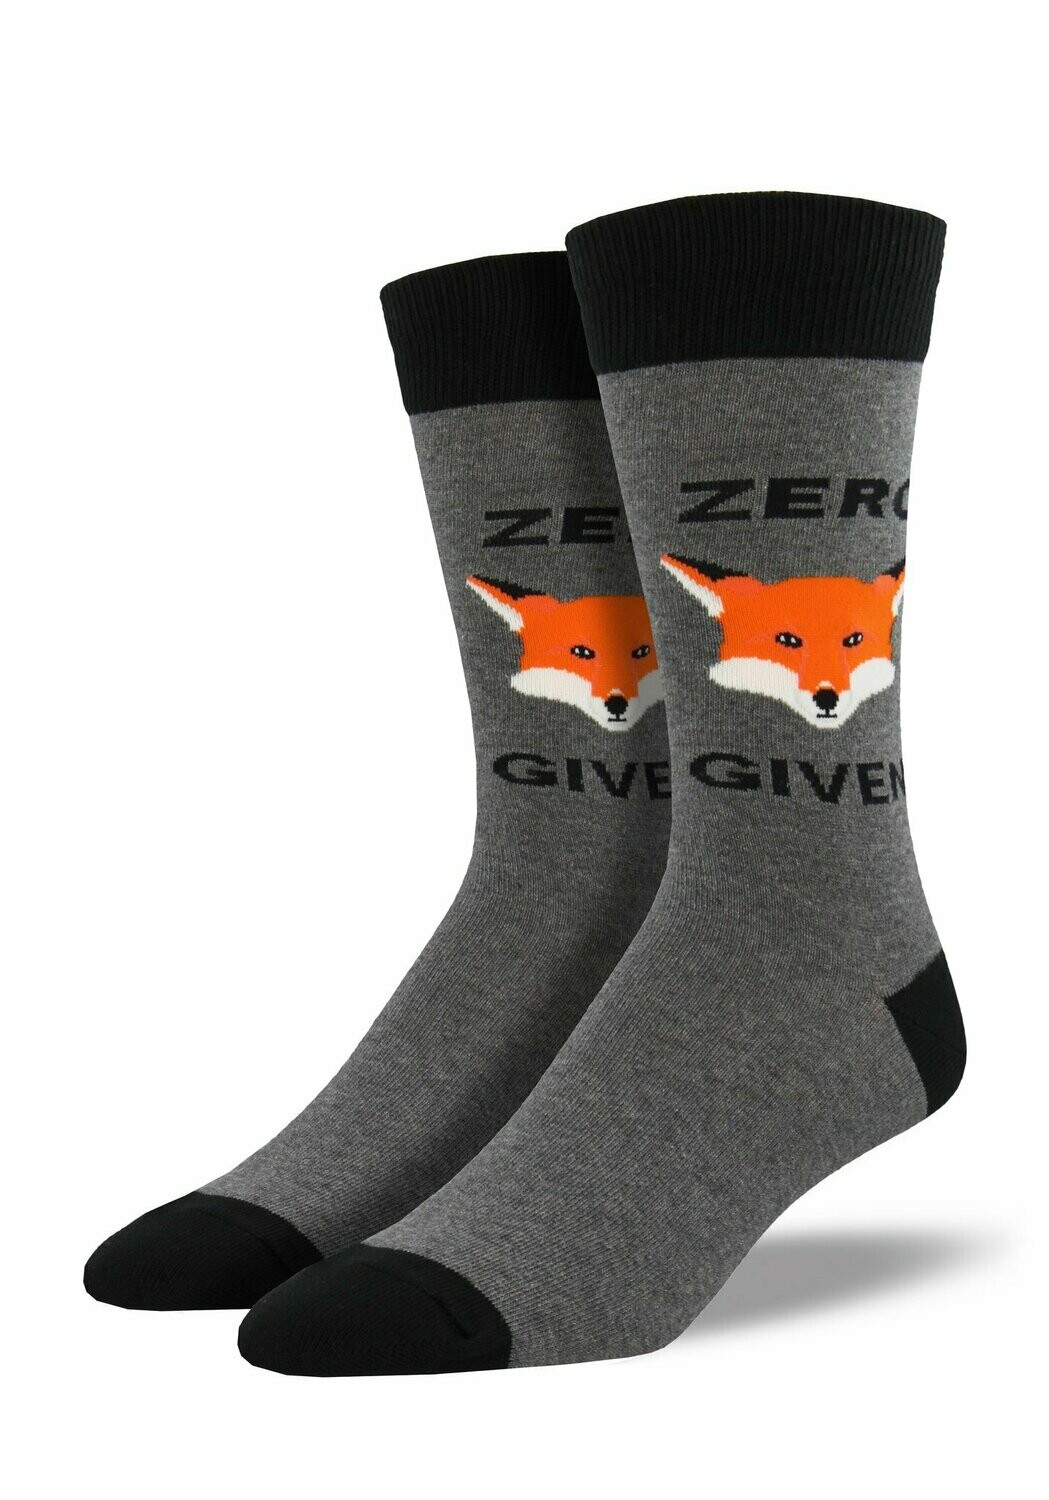 Zero "Fox" Given Heather Gray - Men's Socks